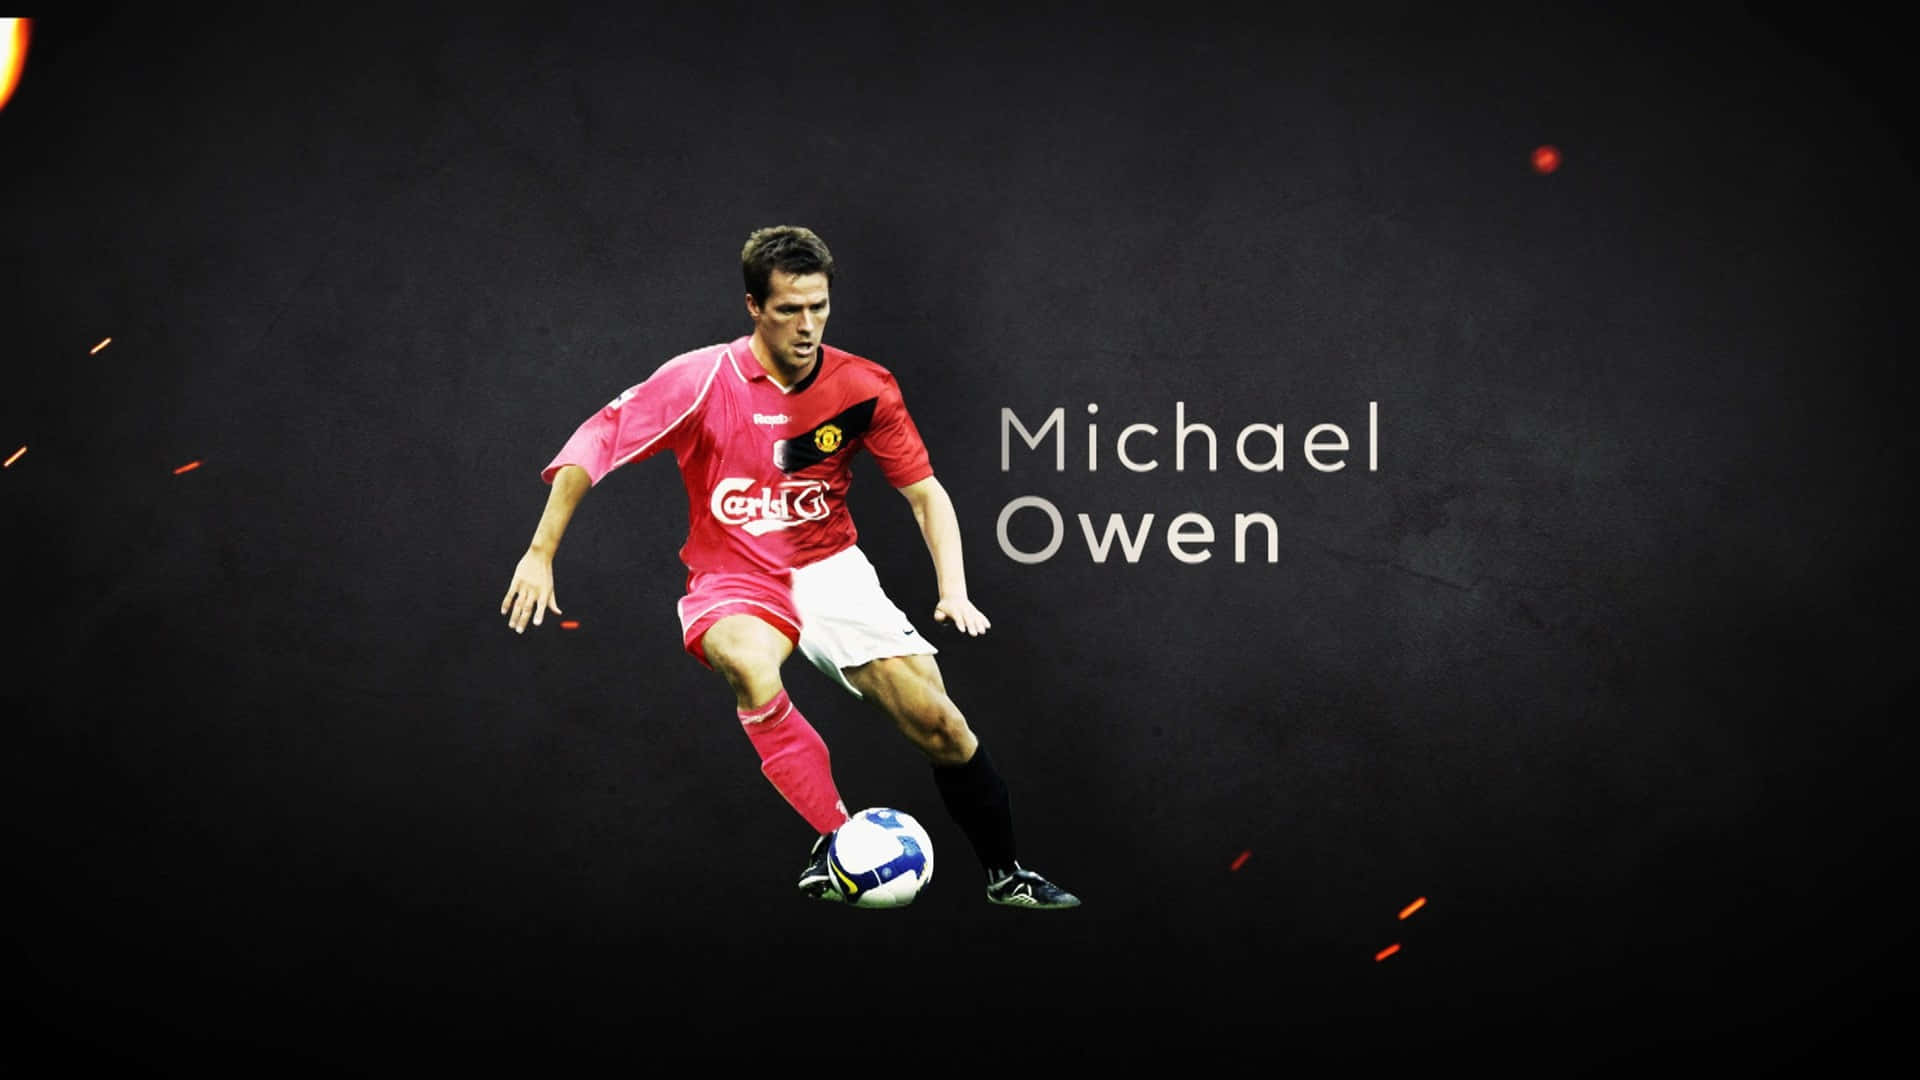 Postermed Den Engelske Fotbollsspelaren Michael Owen. Wallpaper